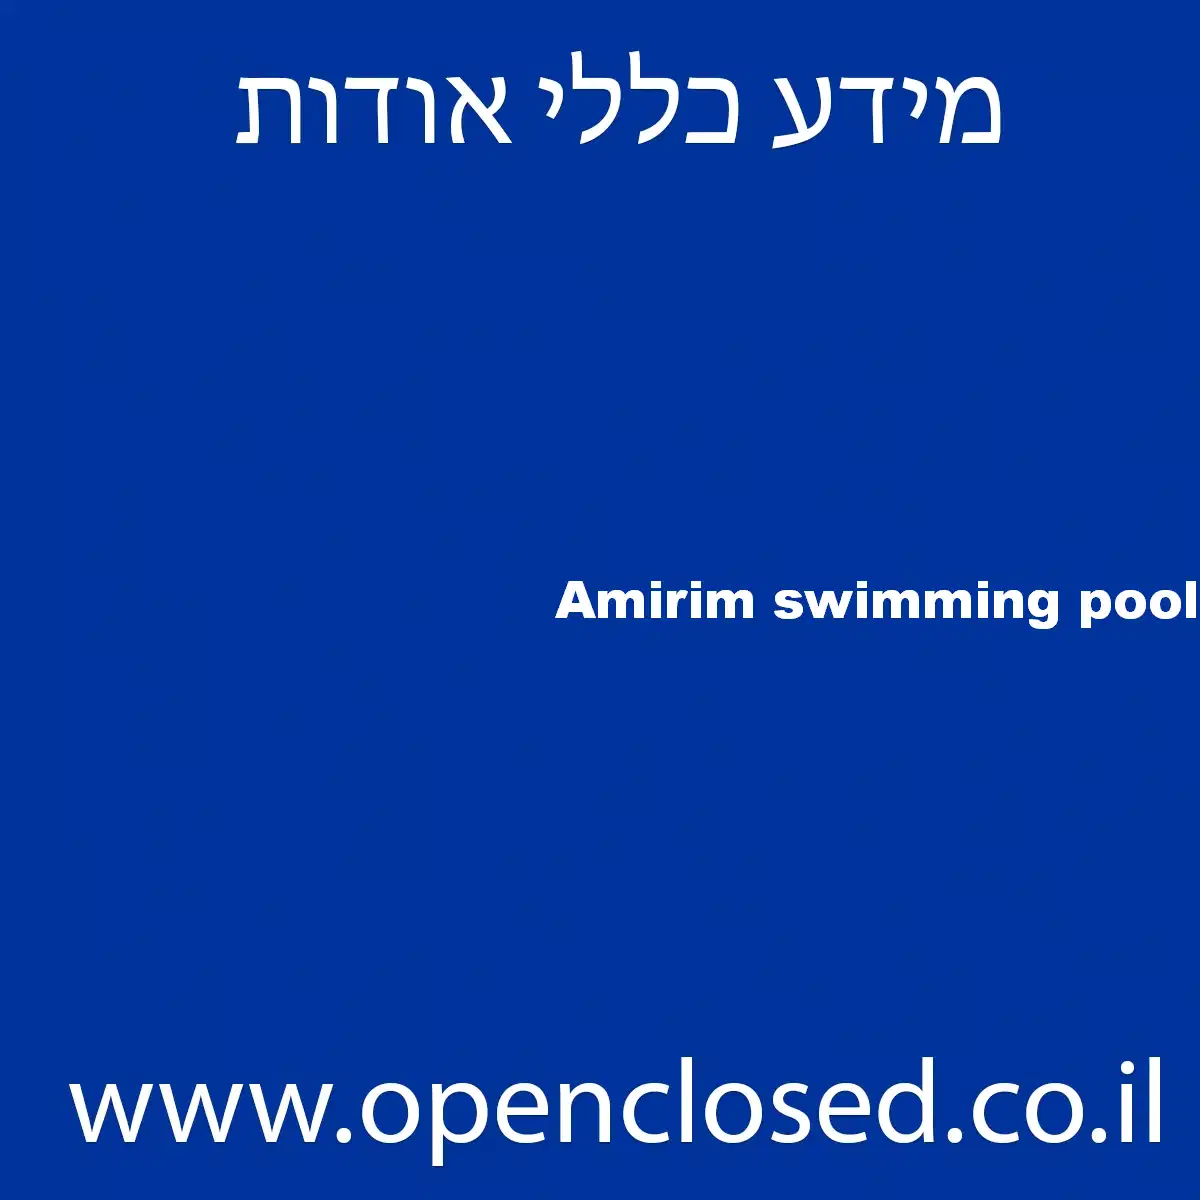 Amirim swimming pool